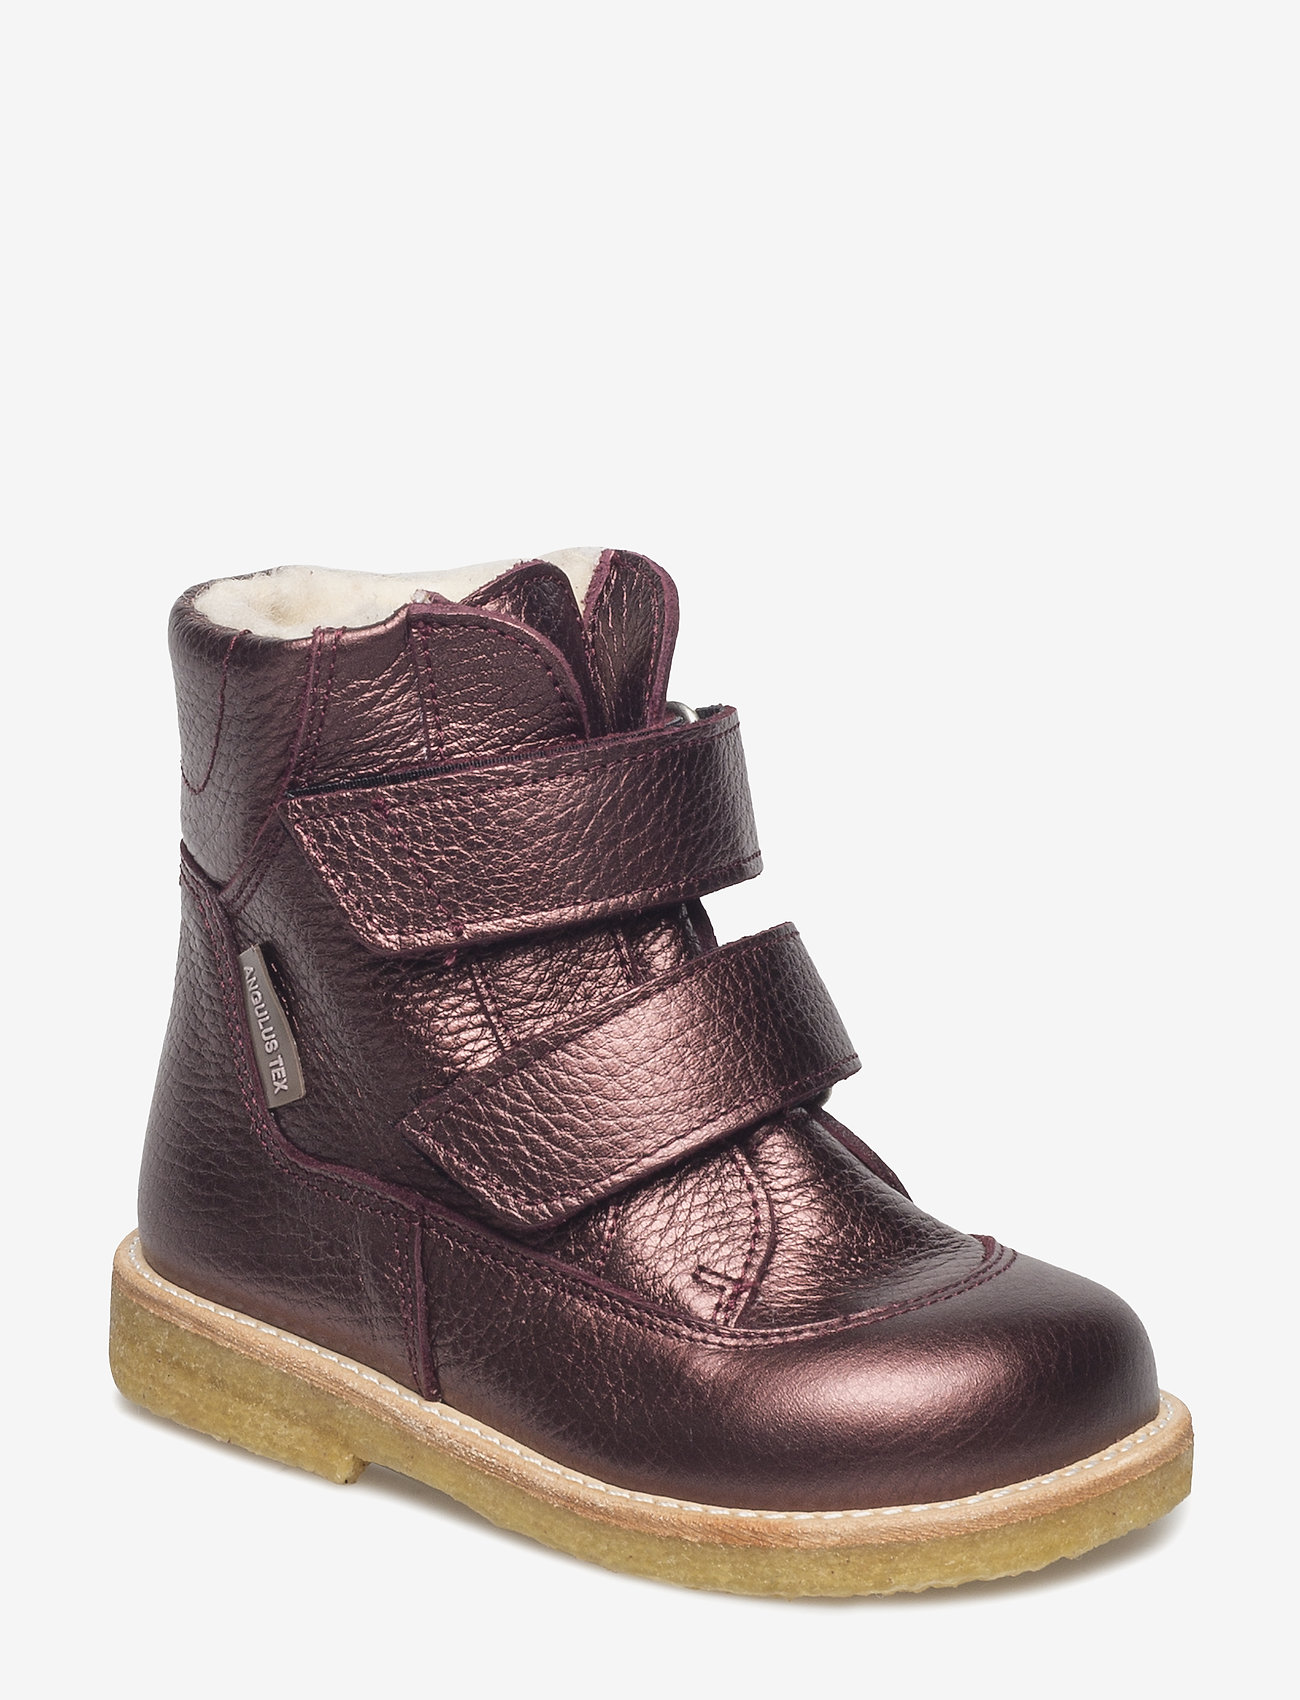 ANGULUS - Boots - flat - with velcro - kinder - 1536 bordeaux shine - 0